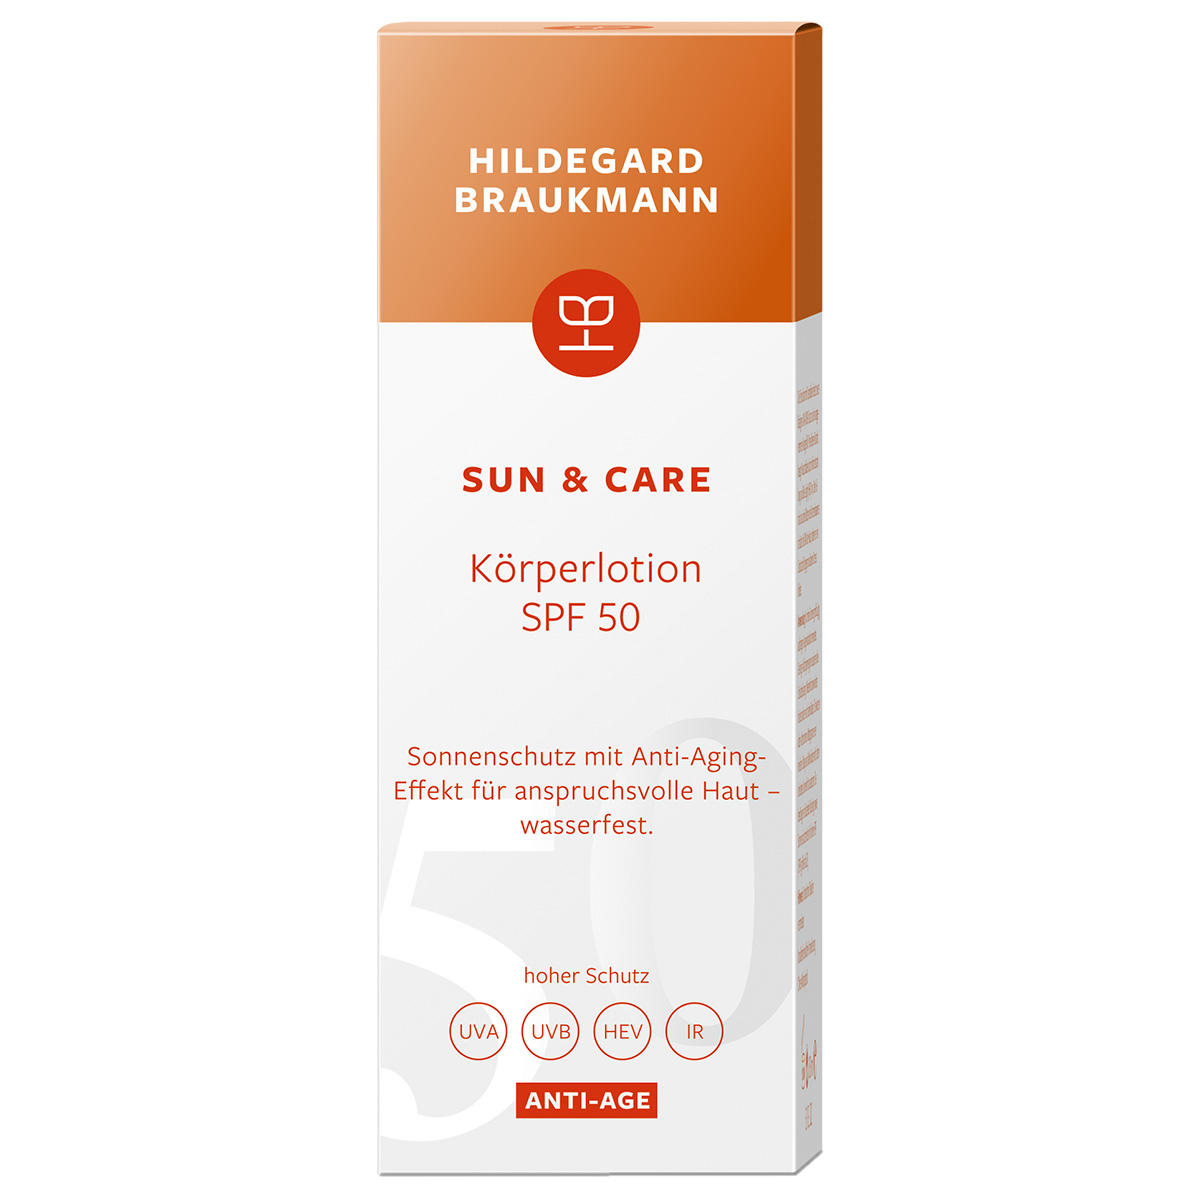 Hildegard Braukmann sun & care Lotion corporelle anti-âge SPF 50 150 ml - 2